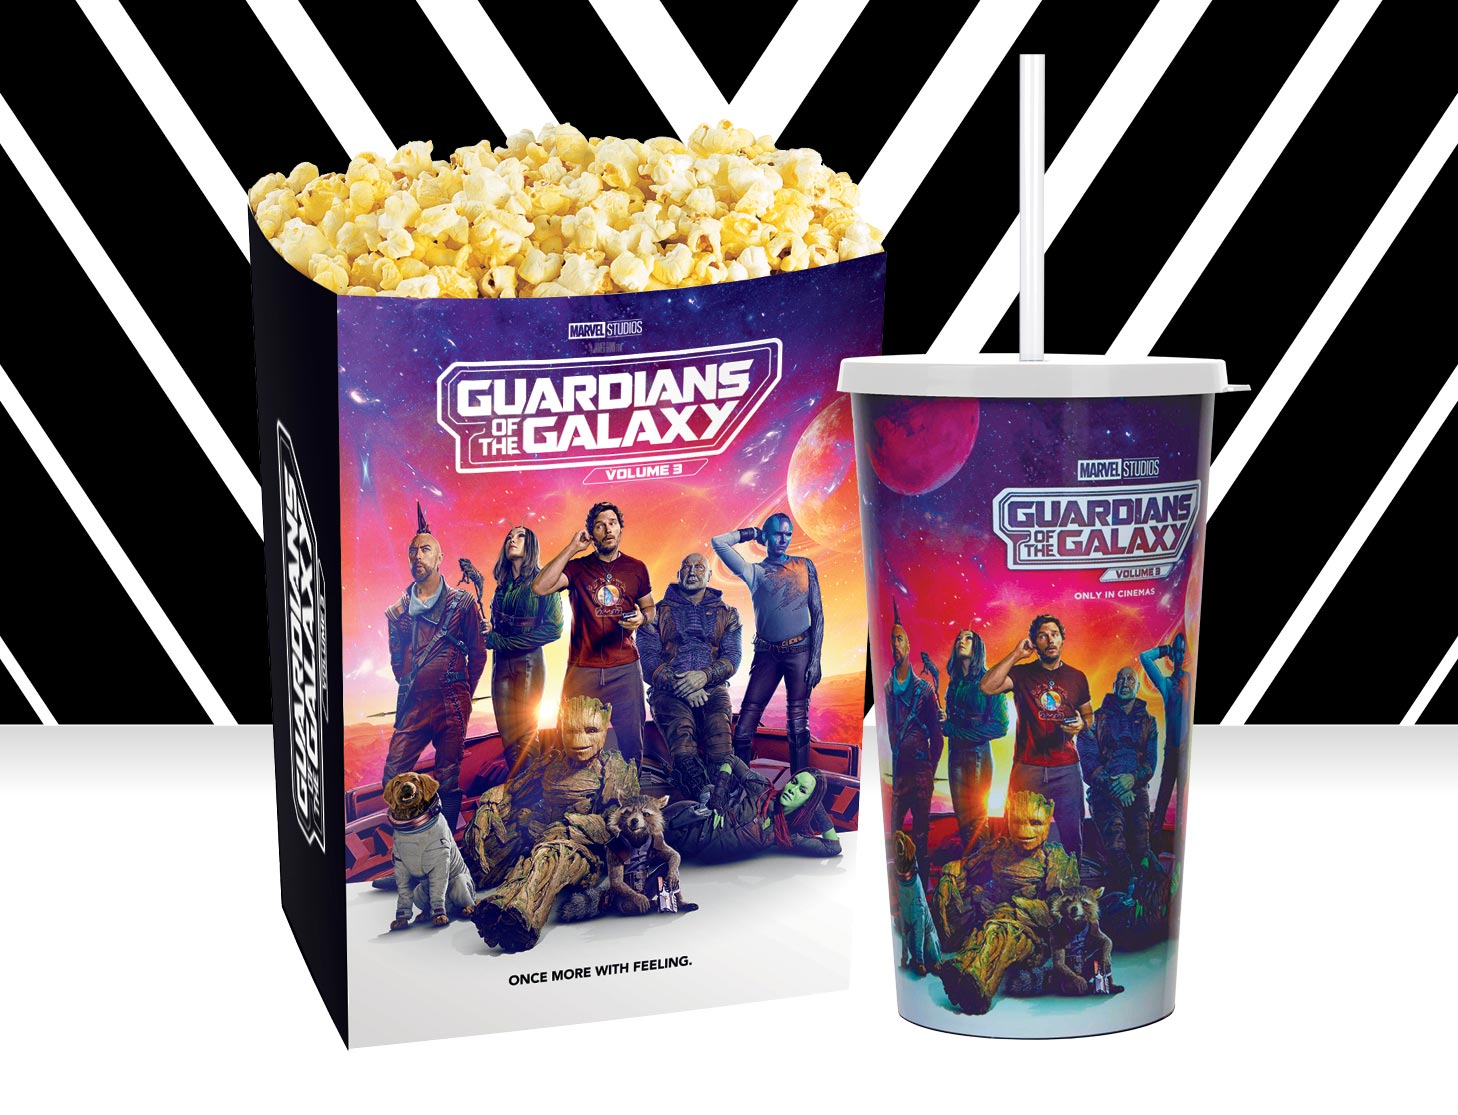 Guardians of the Galaxy Vol 3 - Event Cinemas